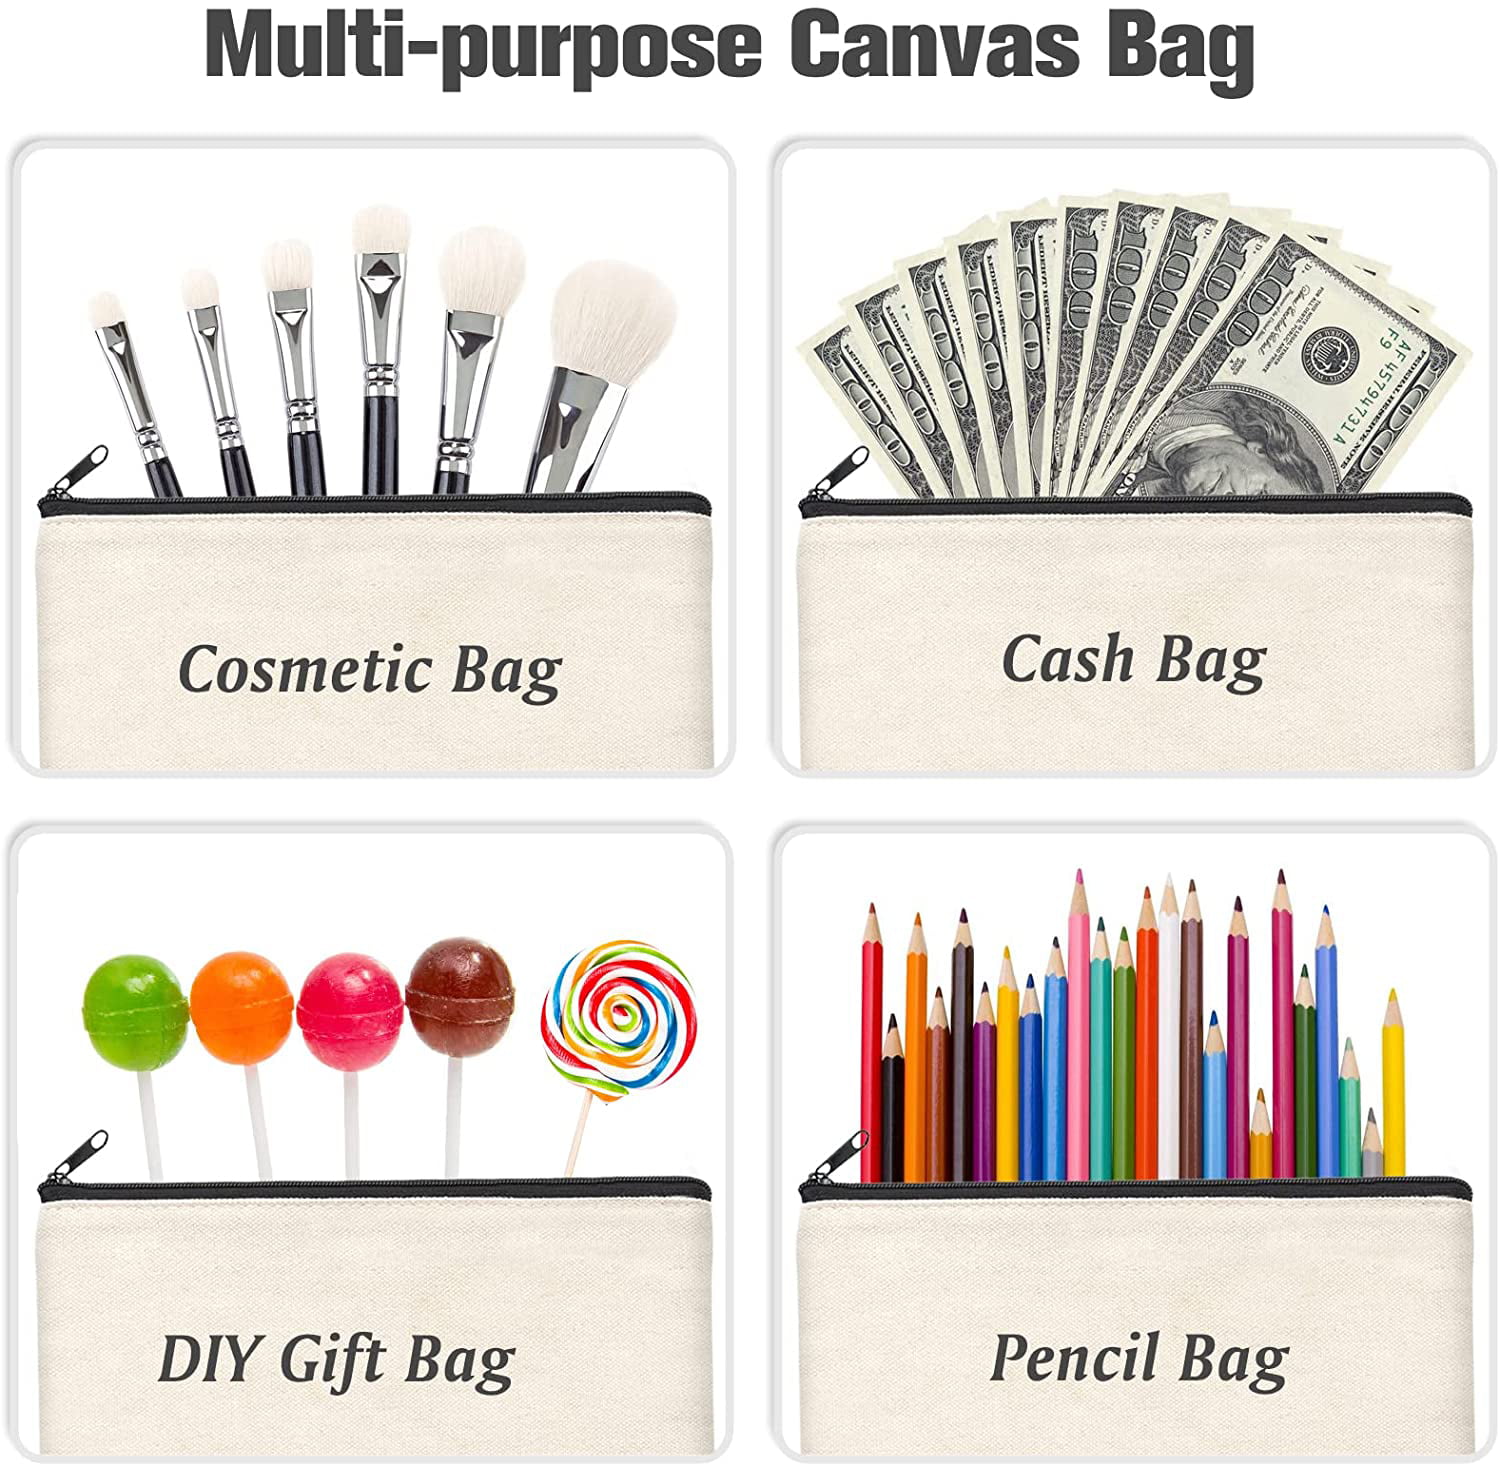 OIAGLH 30Pcs Canvas Makeup Bags Canvas Zipper Pouch Bags Pencil Case DIY  Craft Bags For Travel DIY Craft School Colorful Zipper 